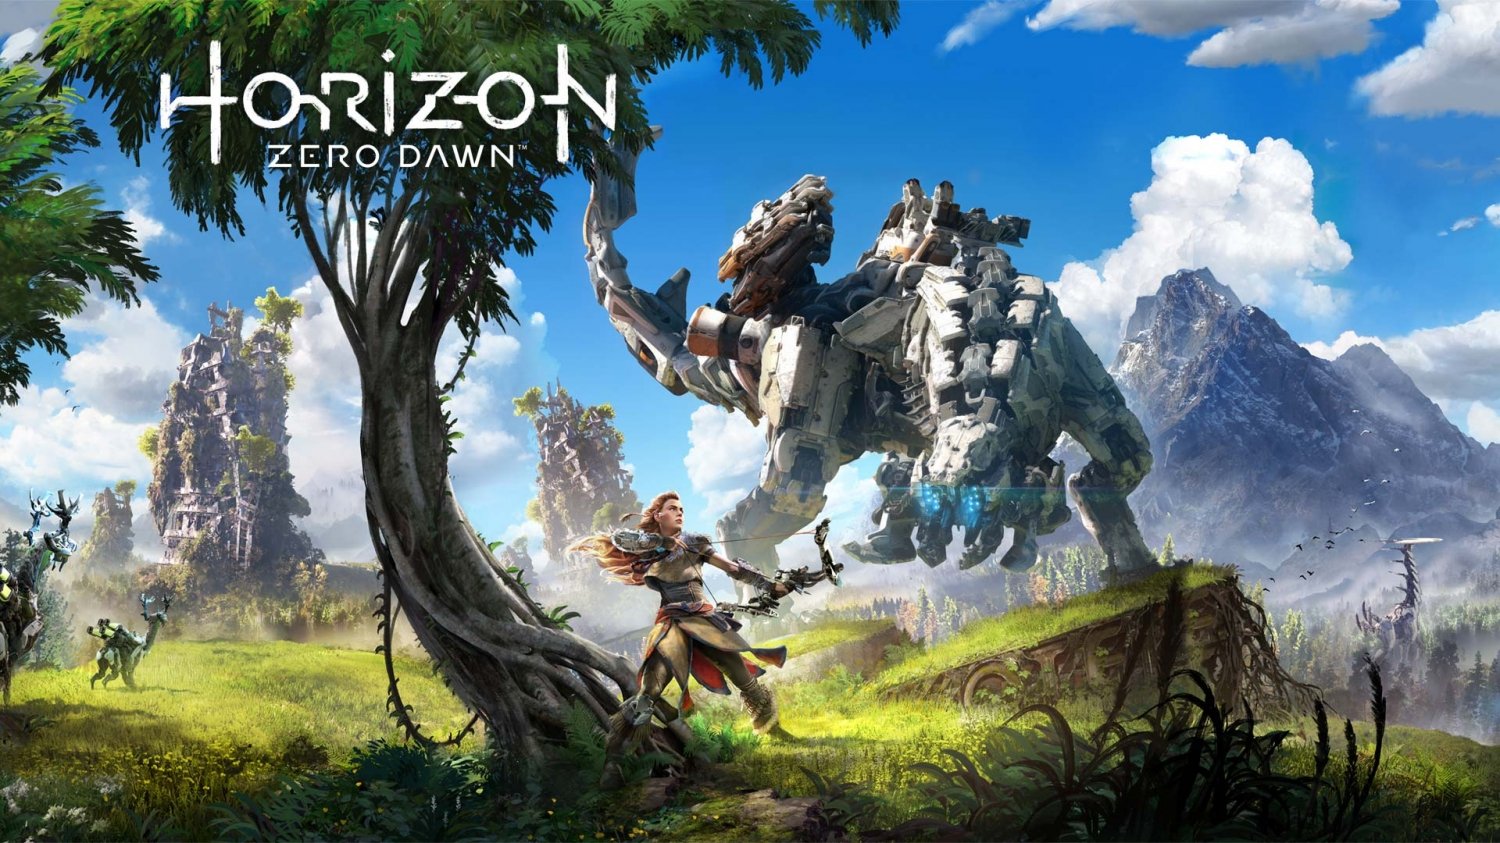 Horizon Zero Dawn is coming to PC